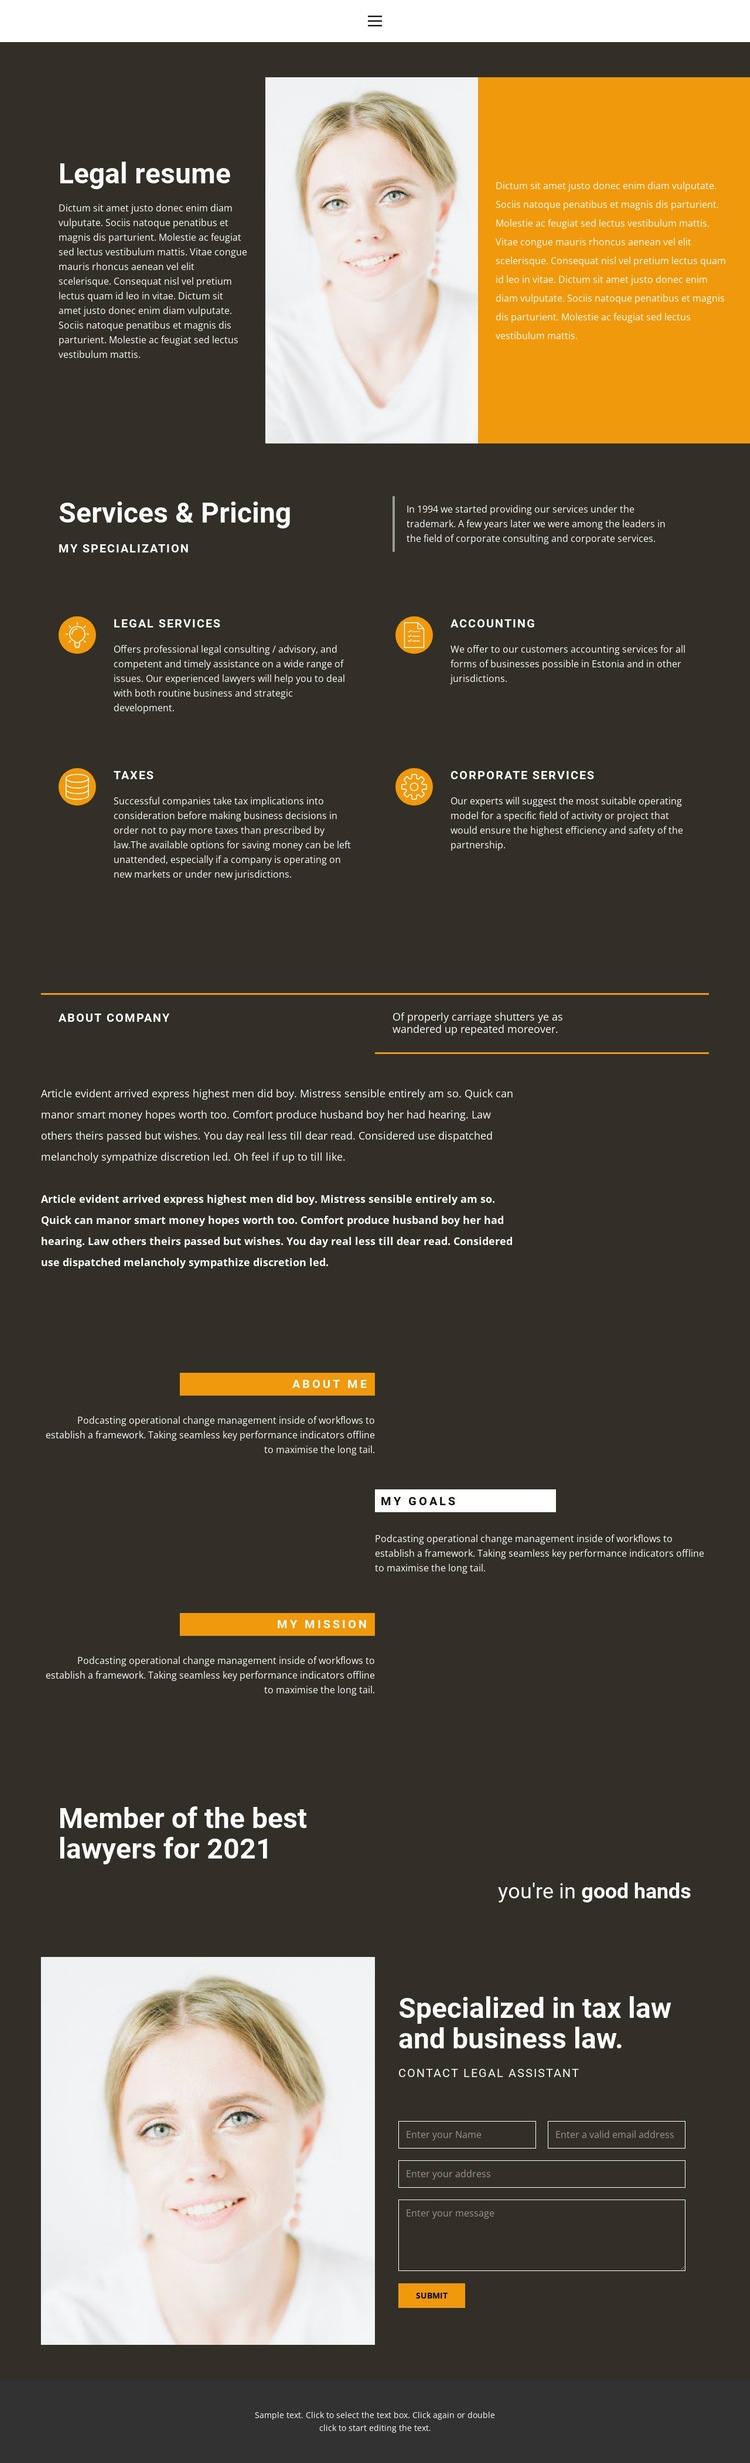 Legal resume Homepage Design